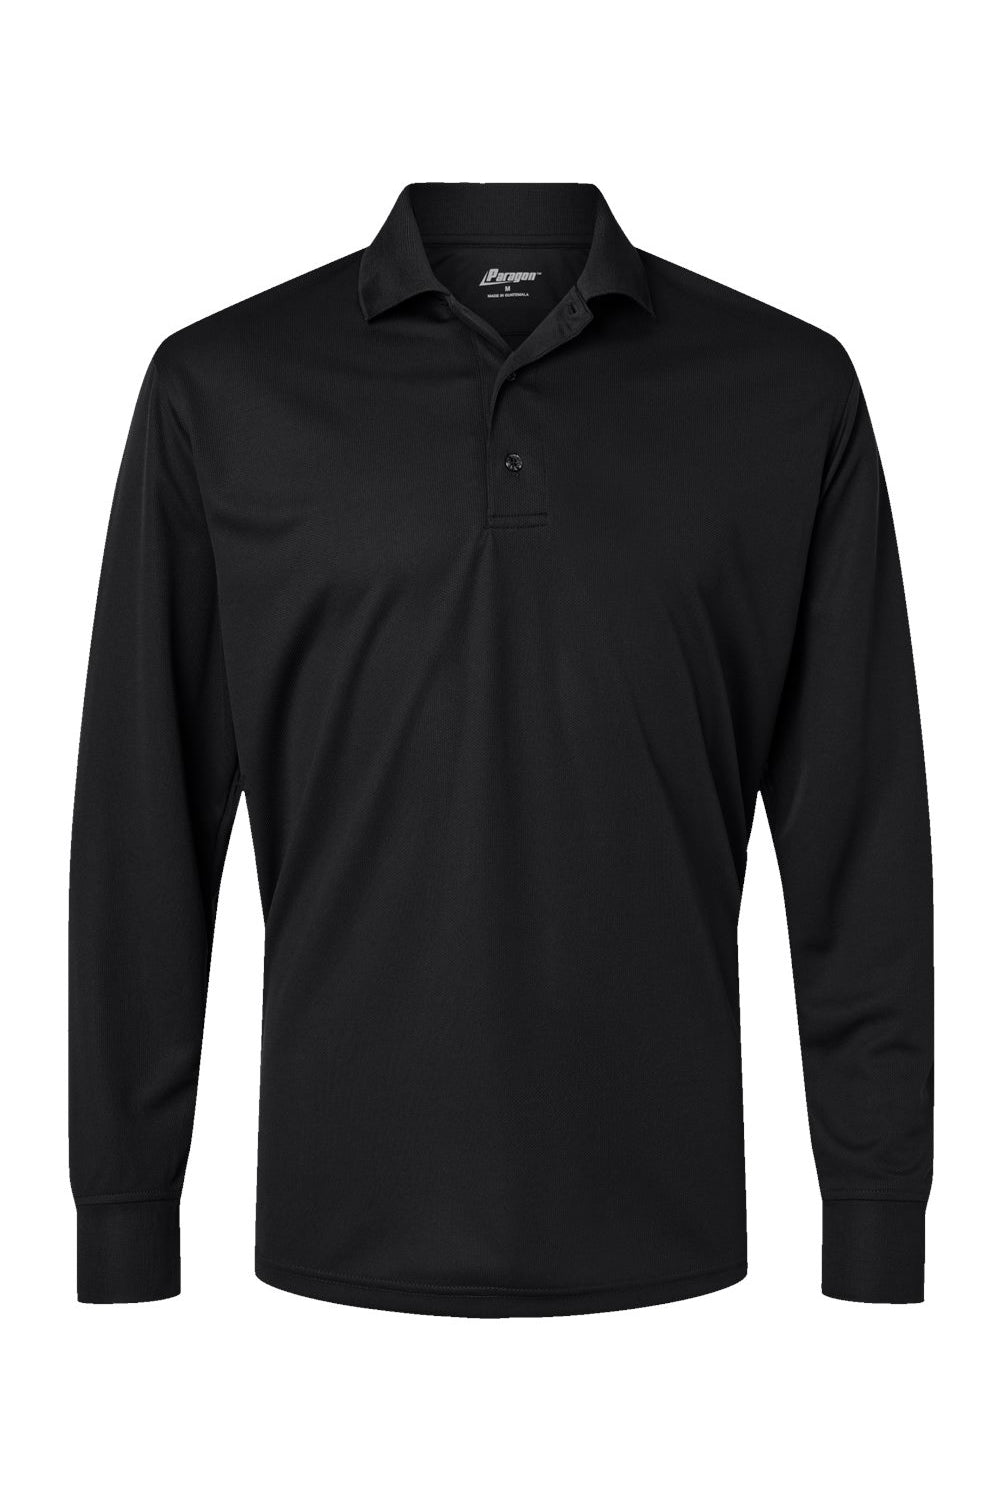 Paragon 110 Mens Prescott Long Sleeve Polo Shirt Black Flat Front